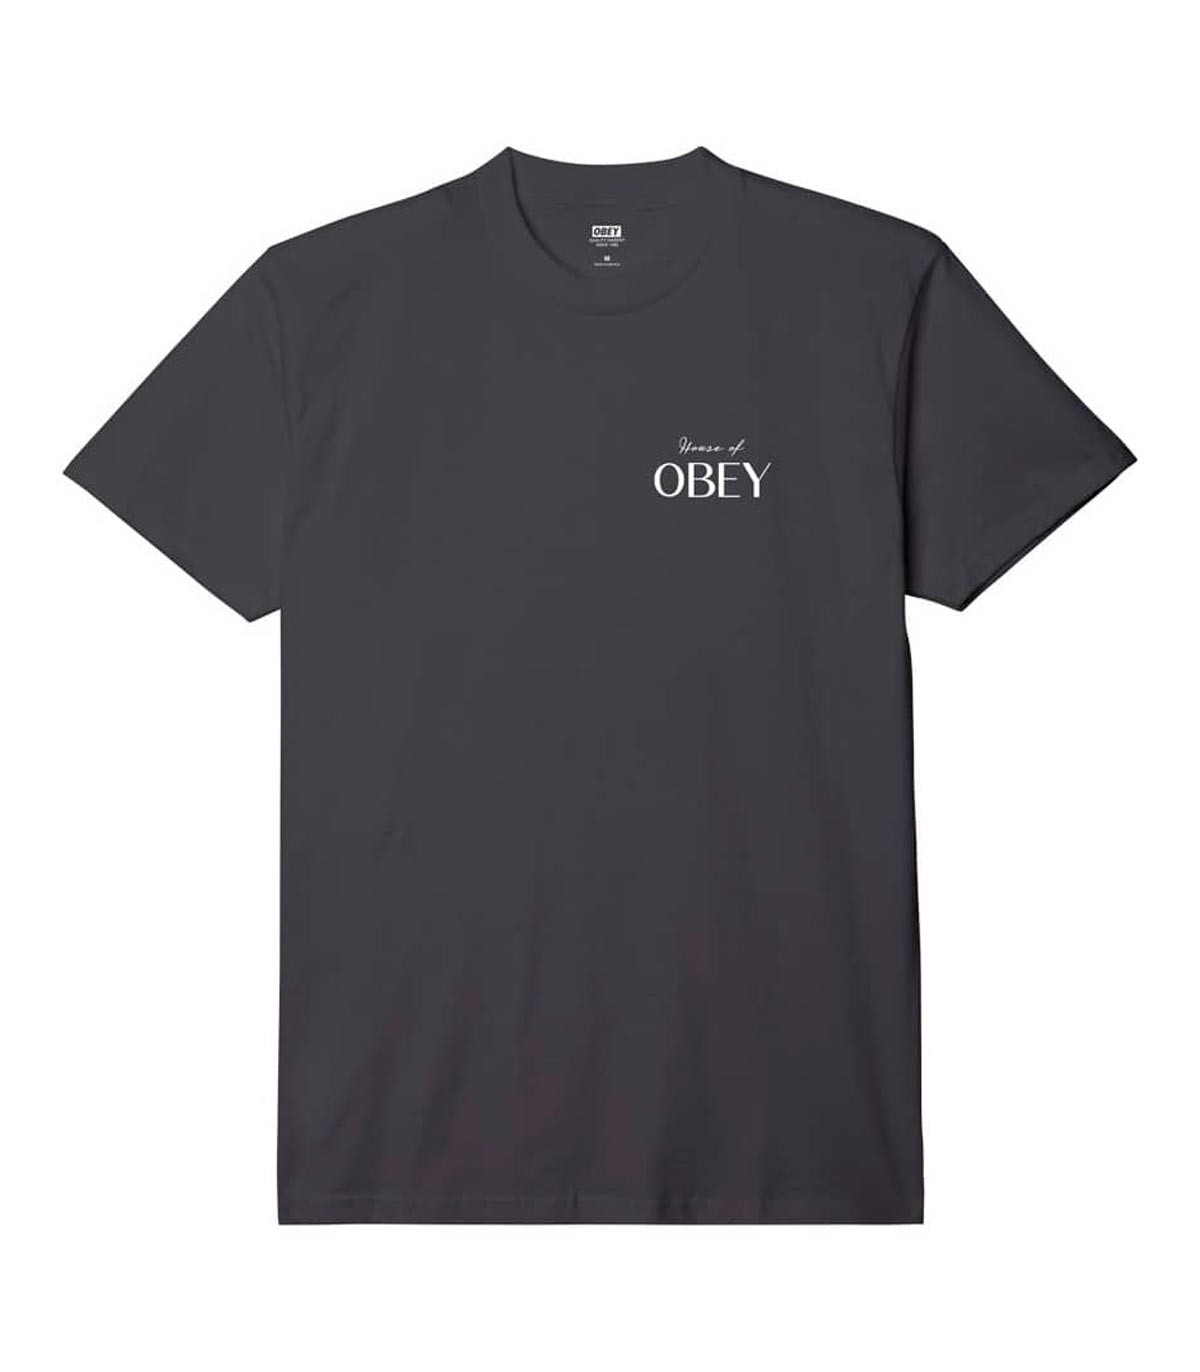 Obey - Camiseta House Of - Negro